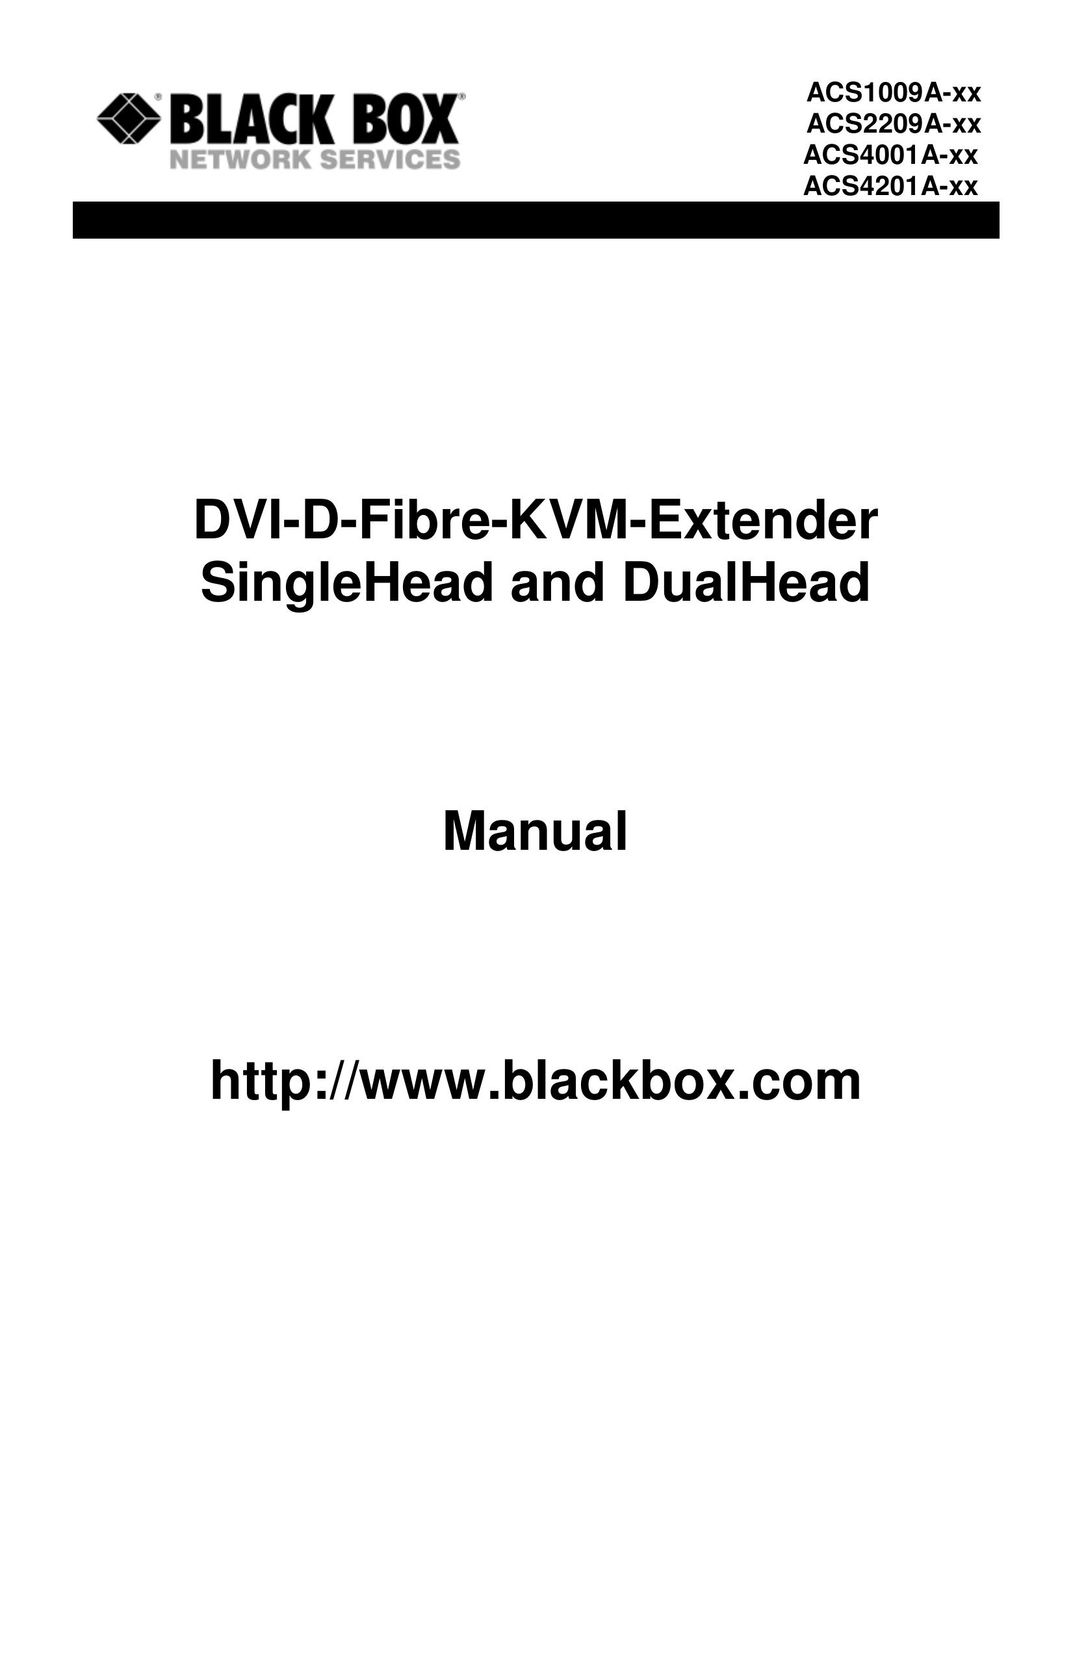 Black Box ACS1009A-xx Network Card User Manual